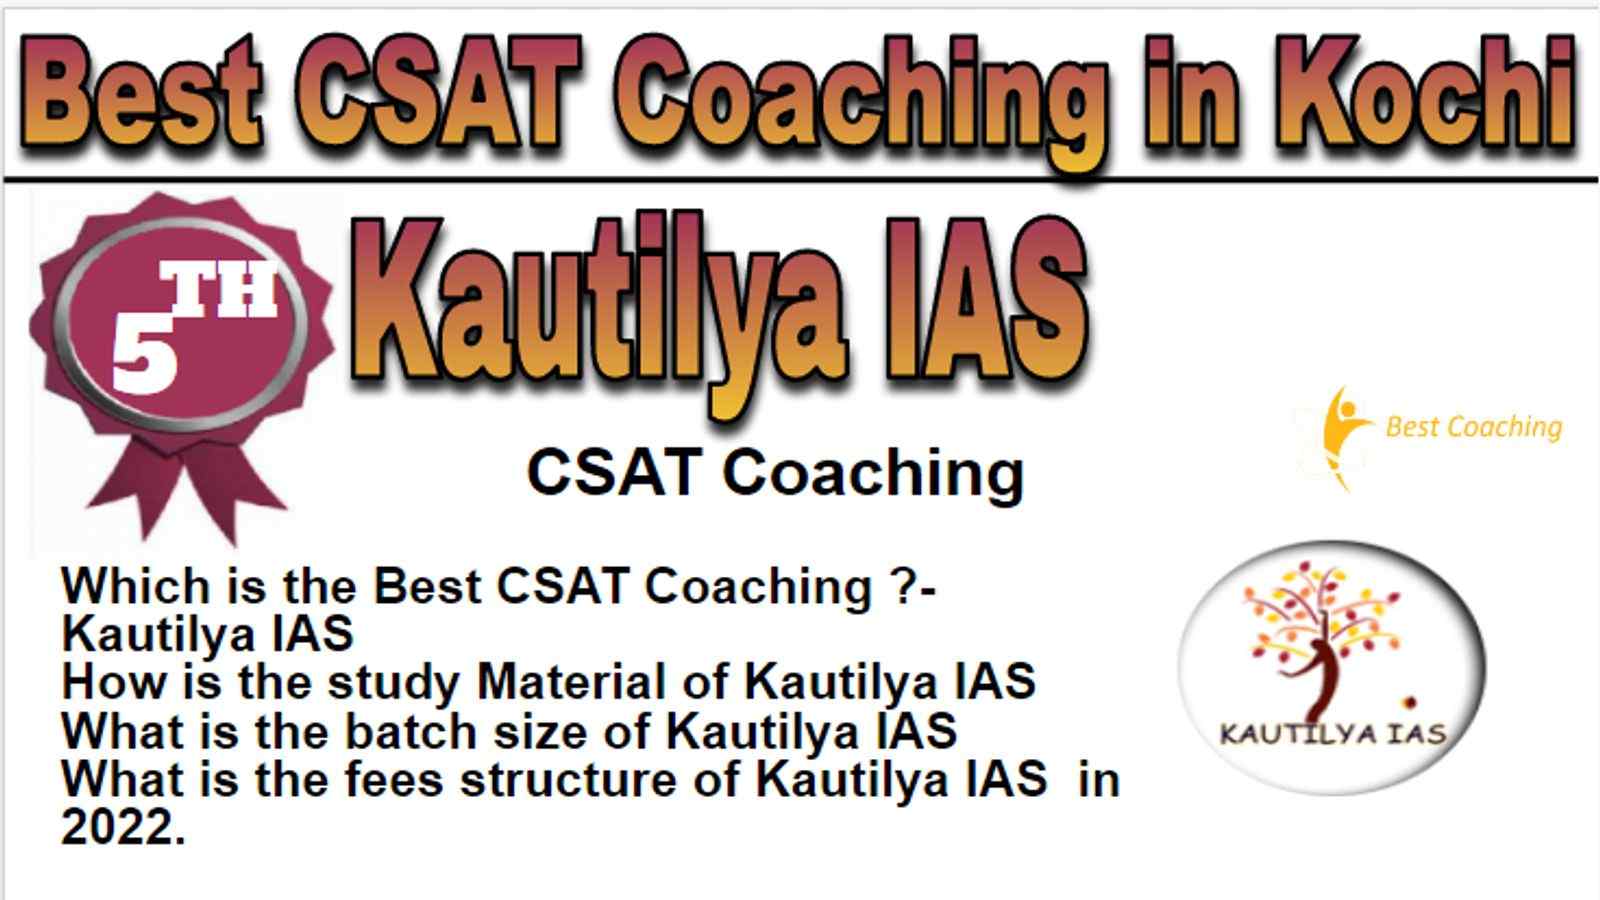 Rank 5 Best CSAT Coaching in Kochi